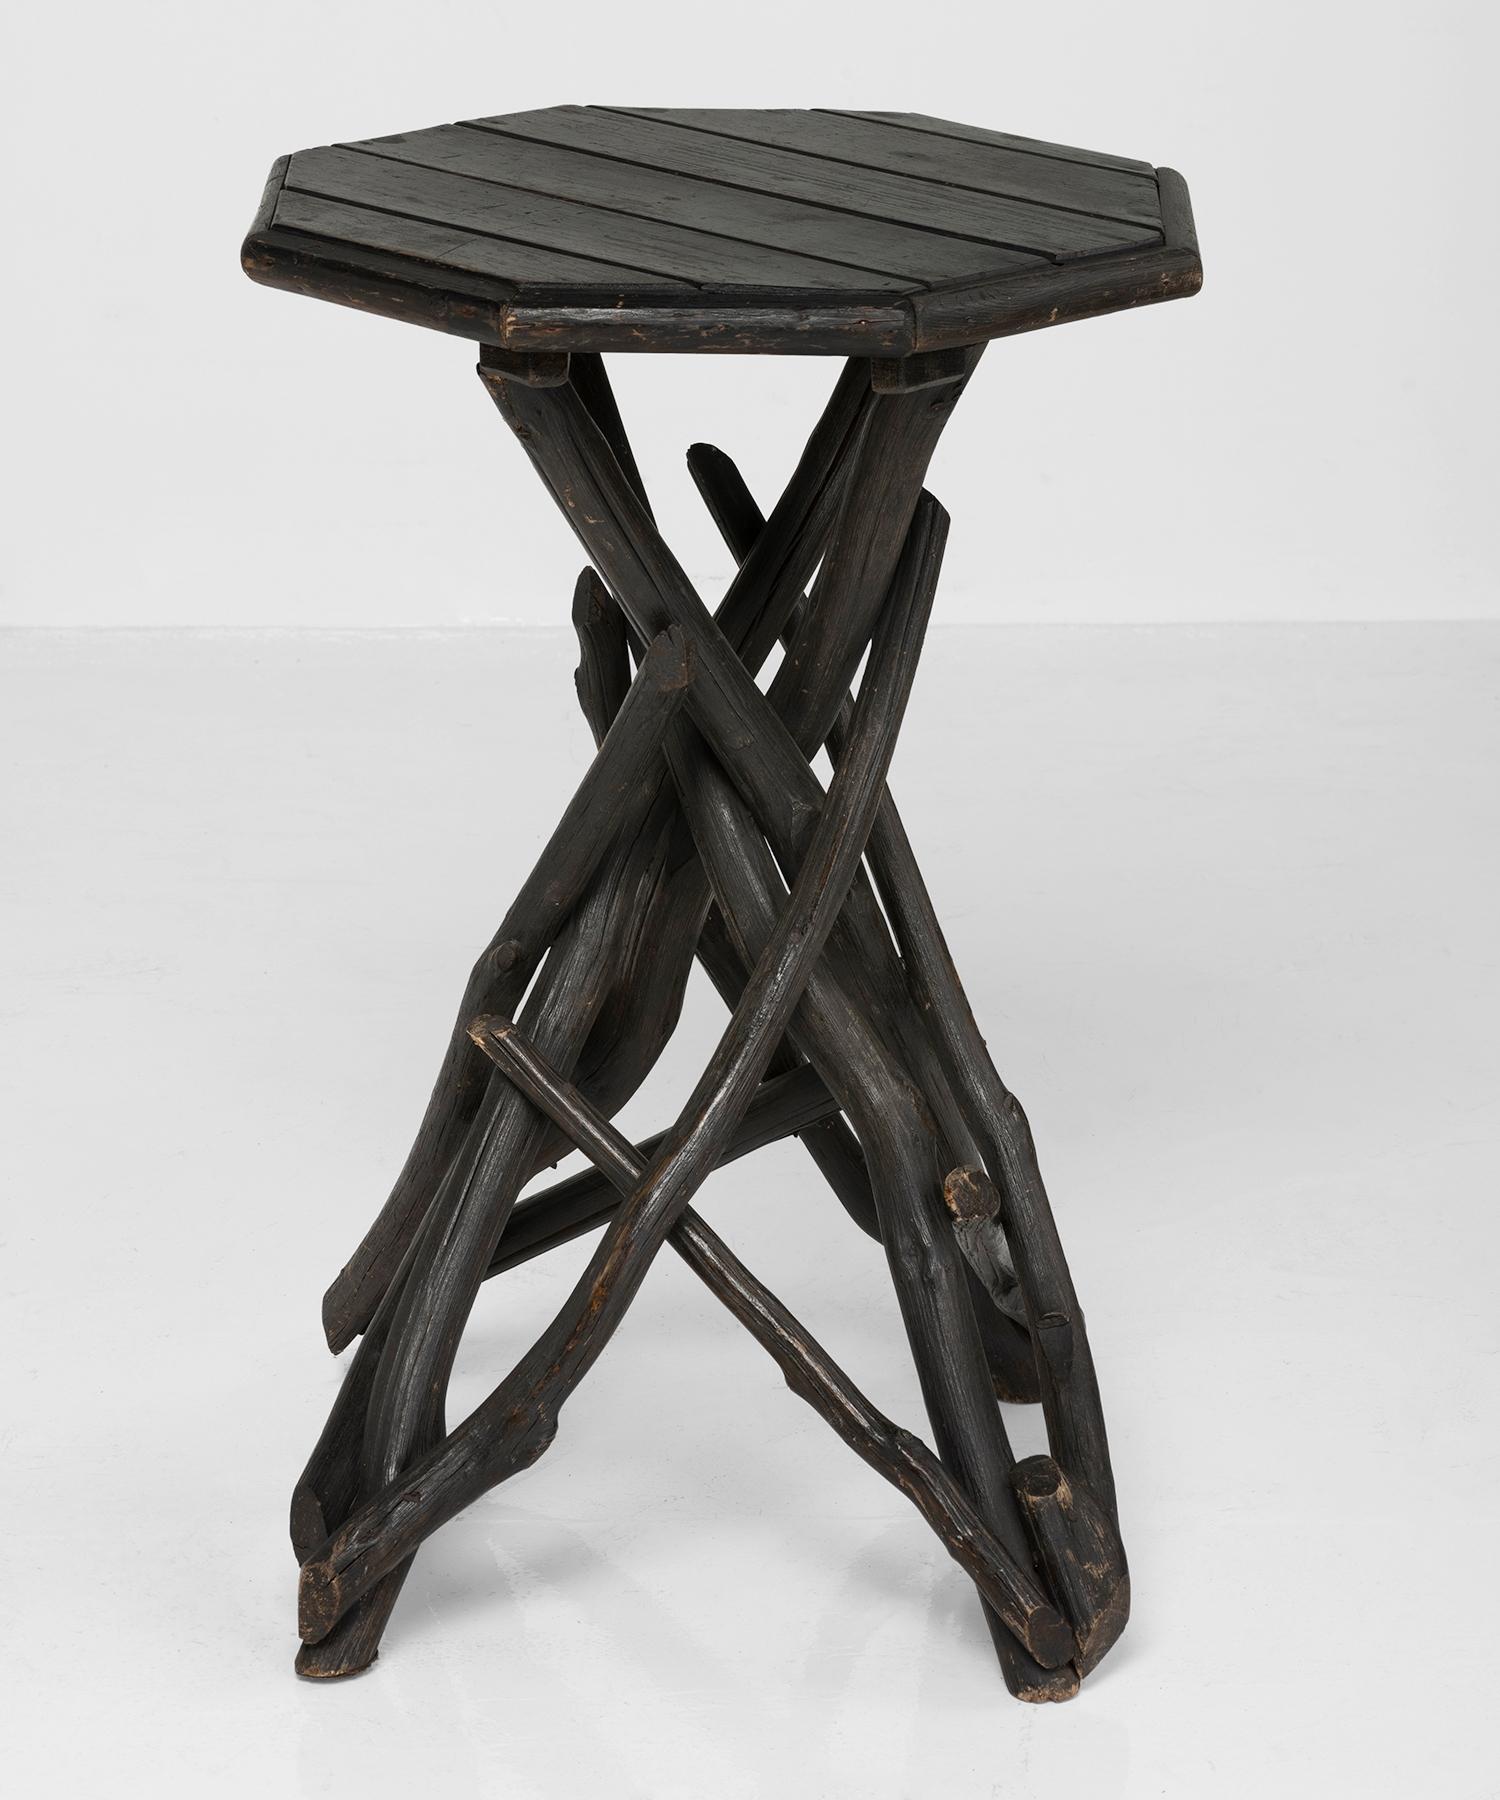 19th Century Octagonal Twig Table